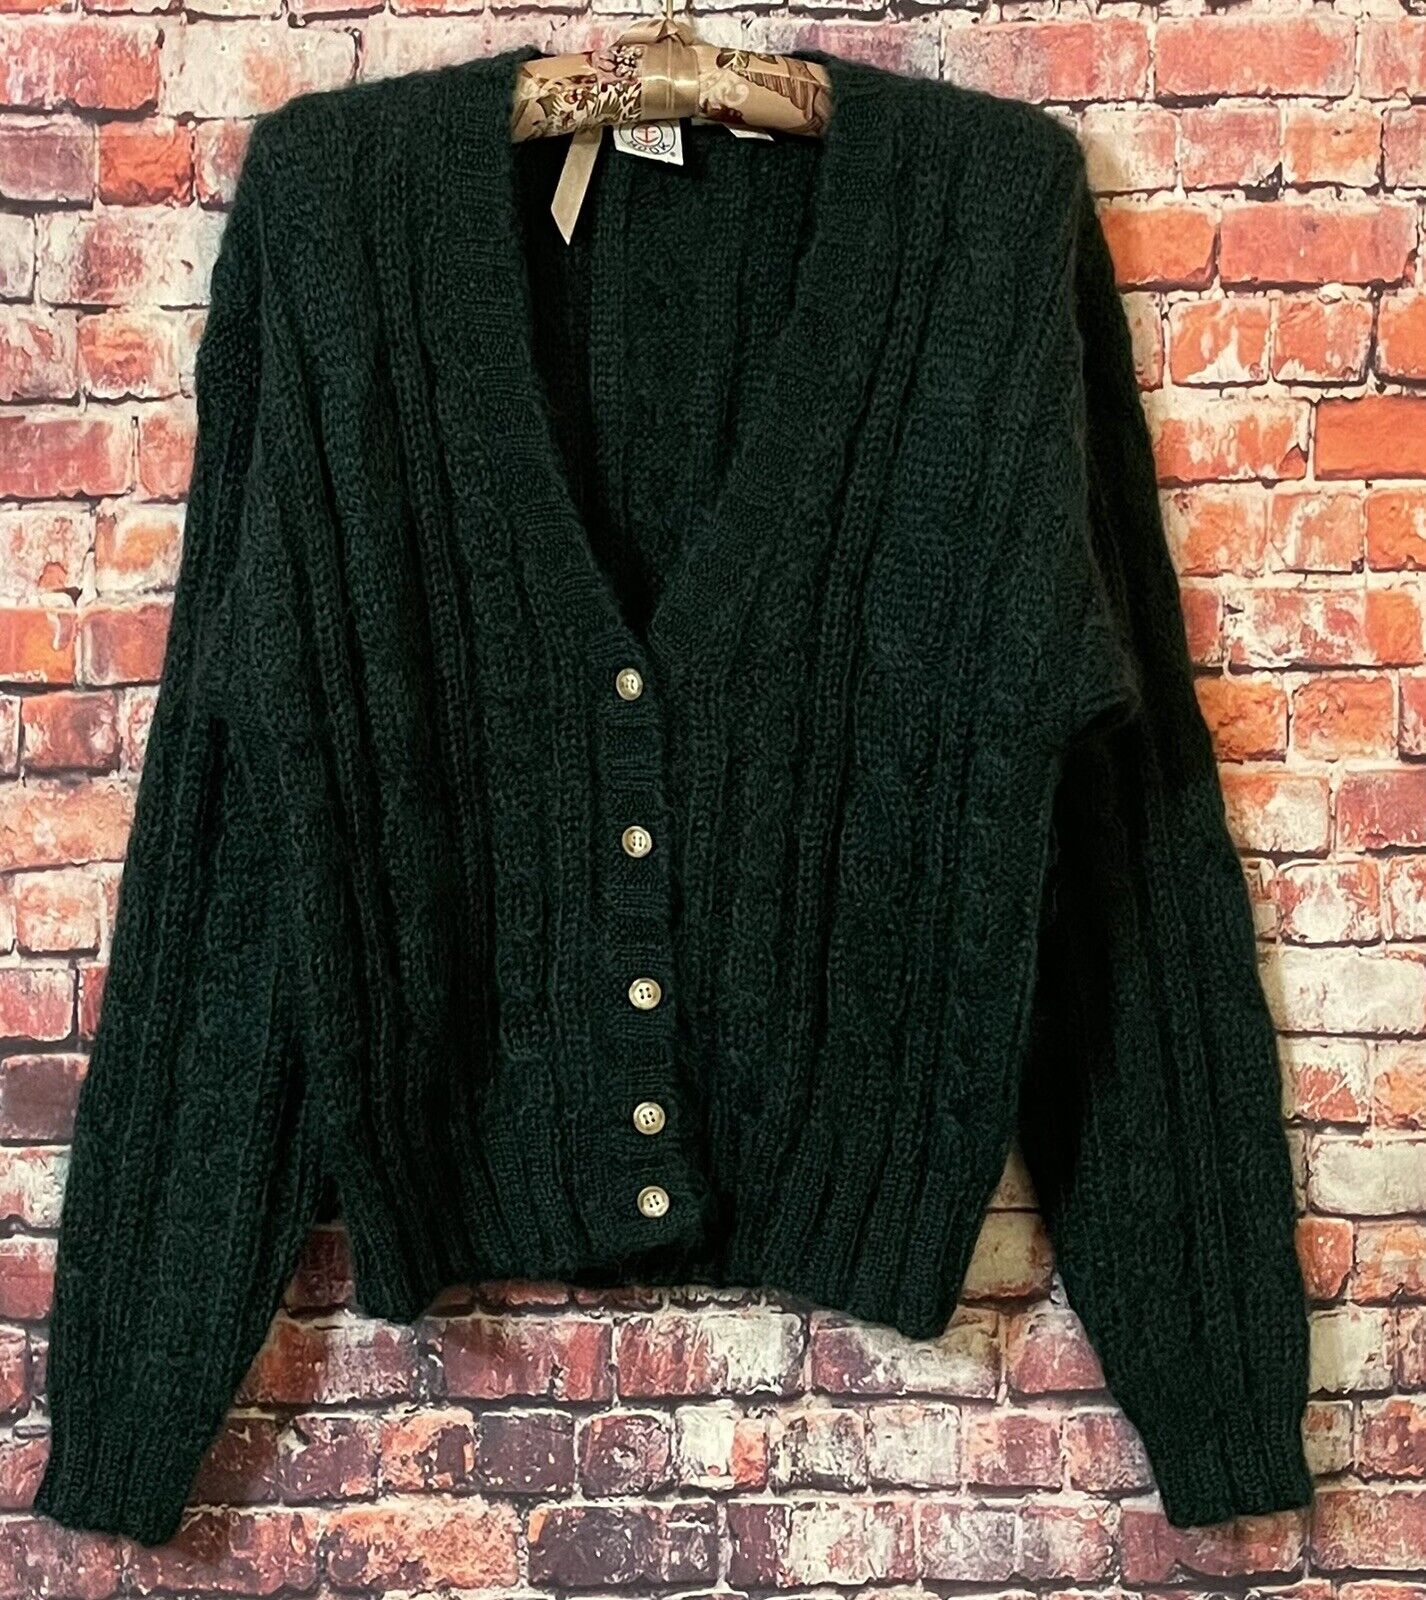 VTG JG Hook Mohair Blend Cable Knit Cardigan Sweater Size L